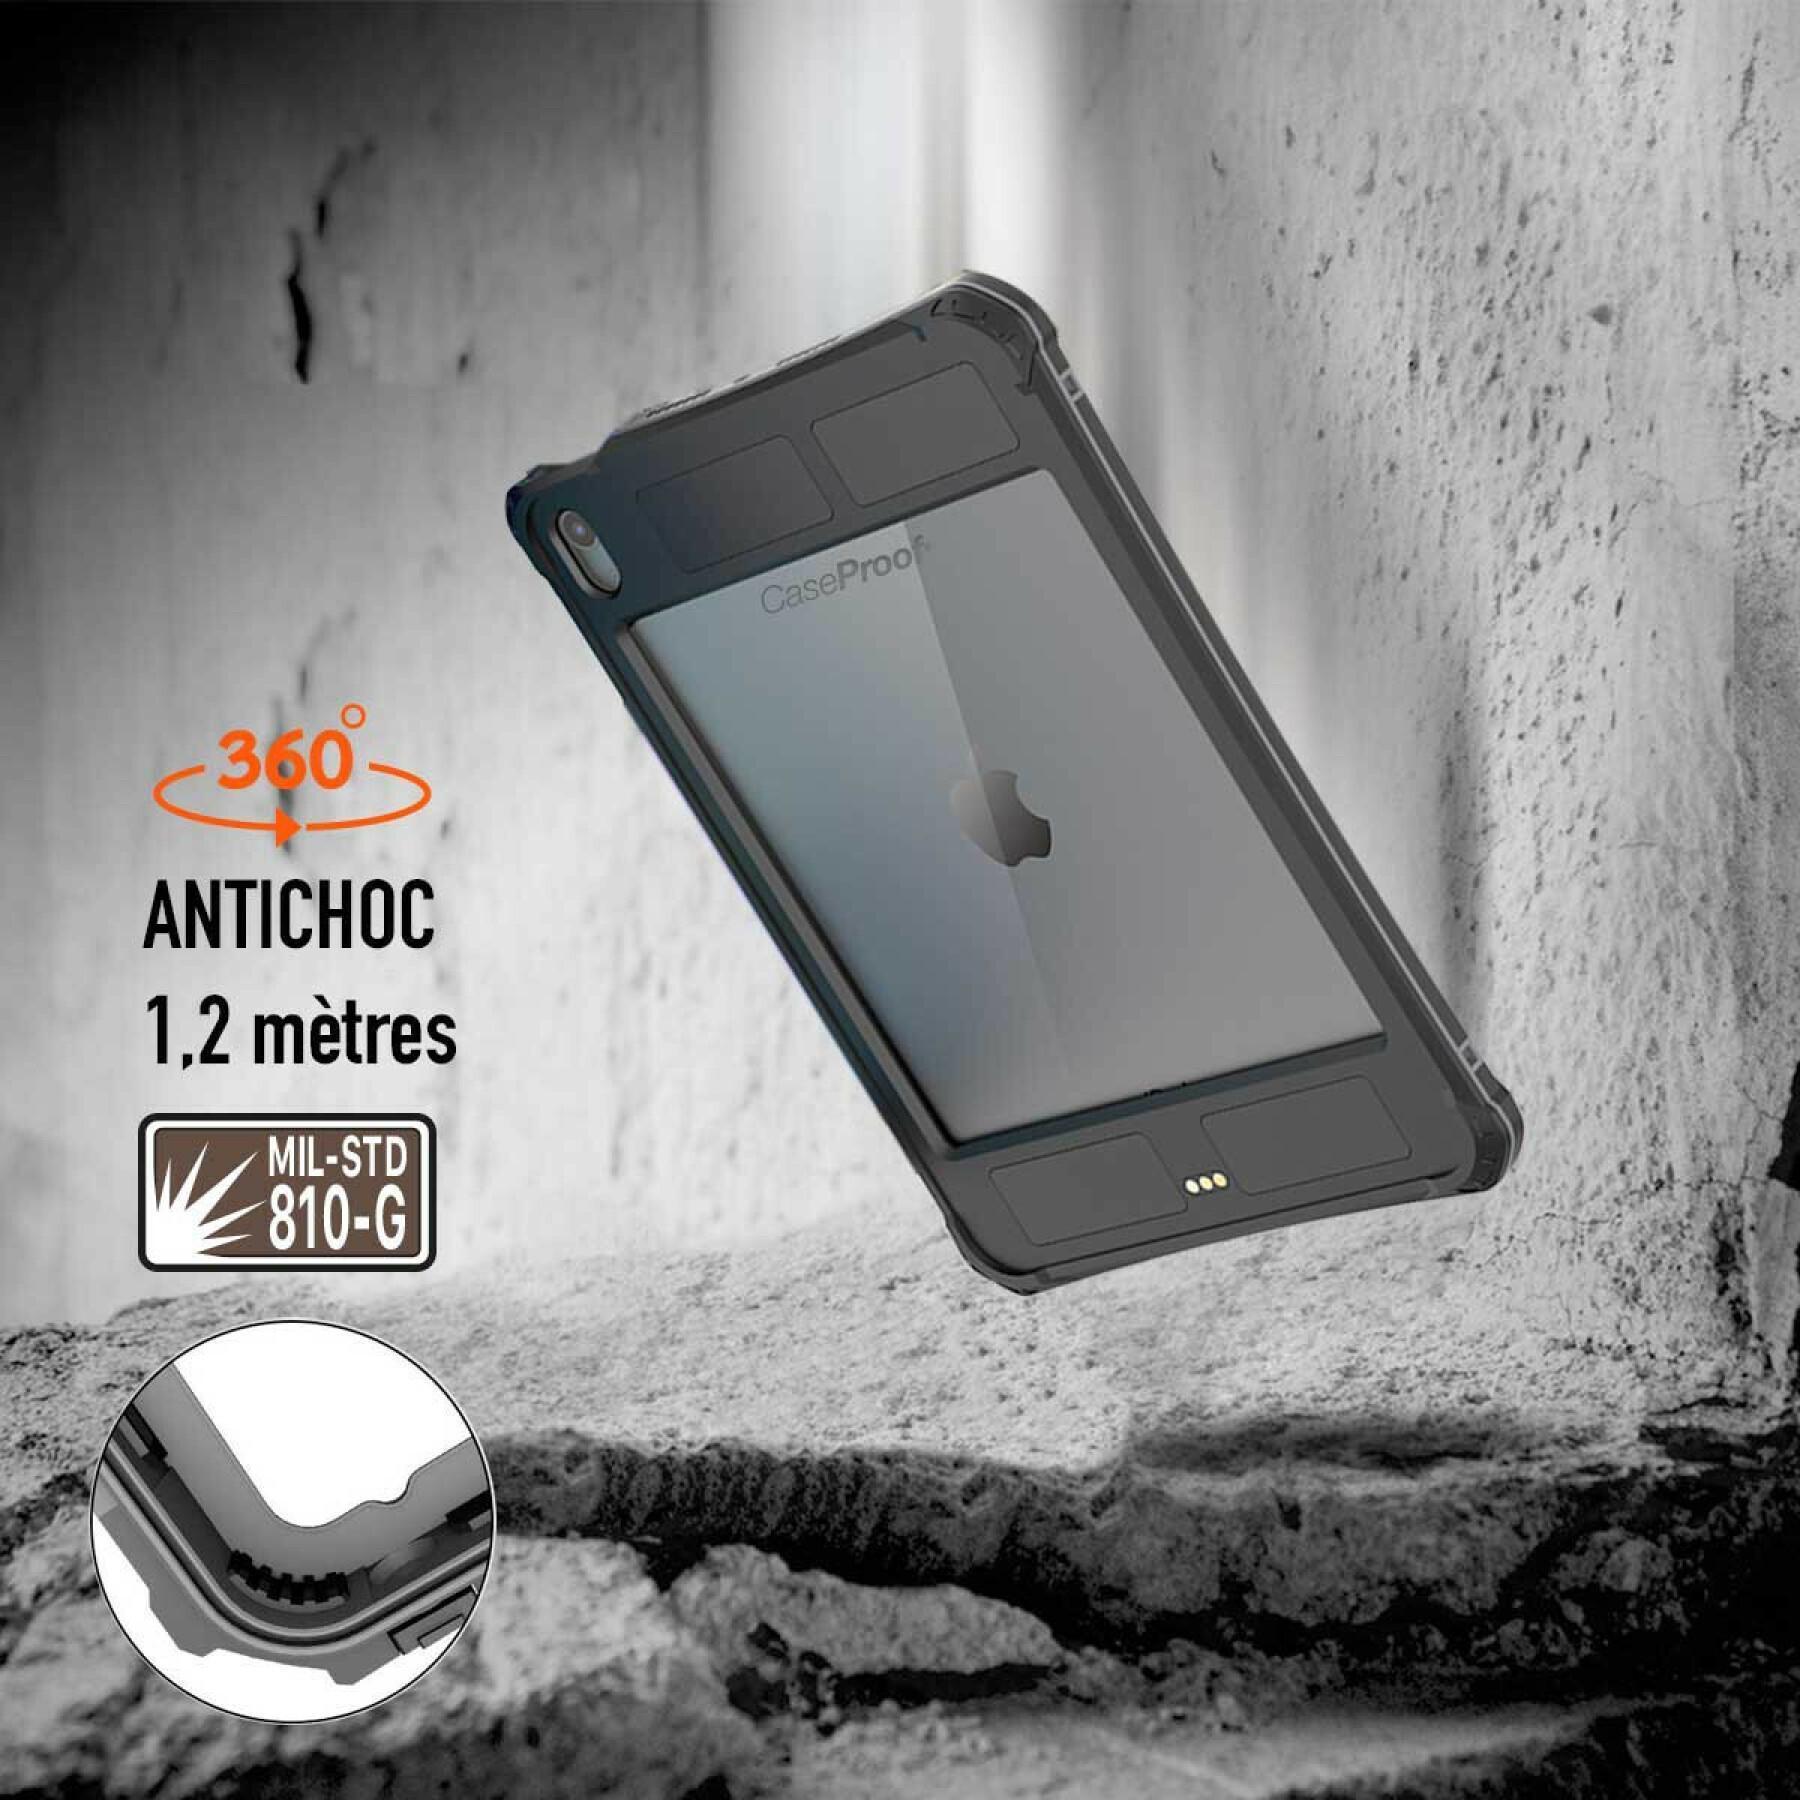 Coque smartphone iPad Air 5 /4 étanche et antichoc CaseProof